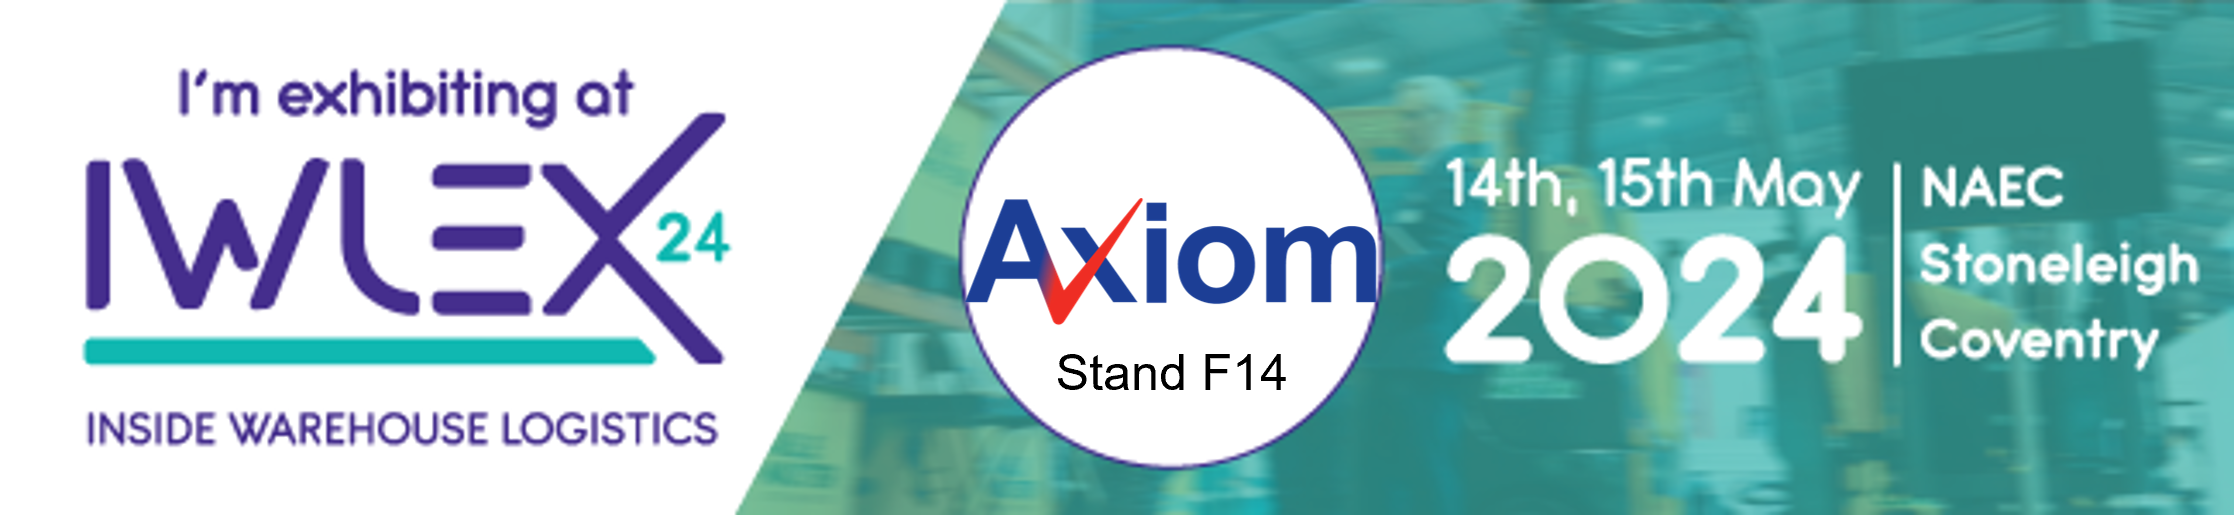 Axiom GB Ltd IWLEX 24 - NAEC Stand F14 Let’s talk…. We’d love to help you solve your materials handling challenges. www.axiomgb.com sales@axiomgb.com +44(0)1827 61212